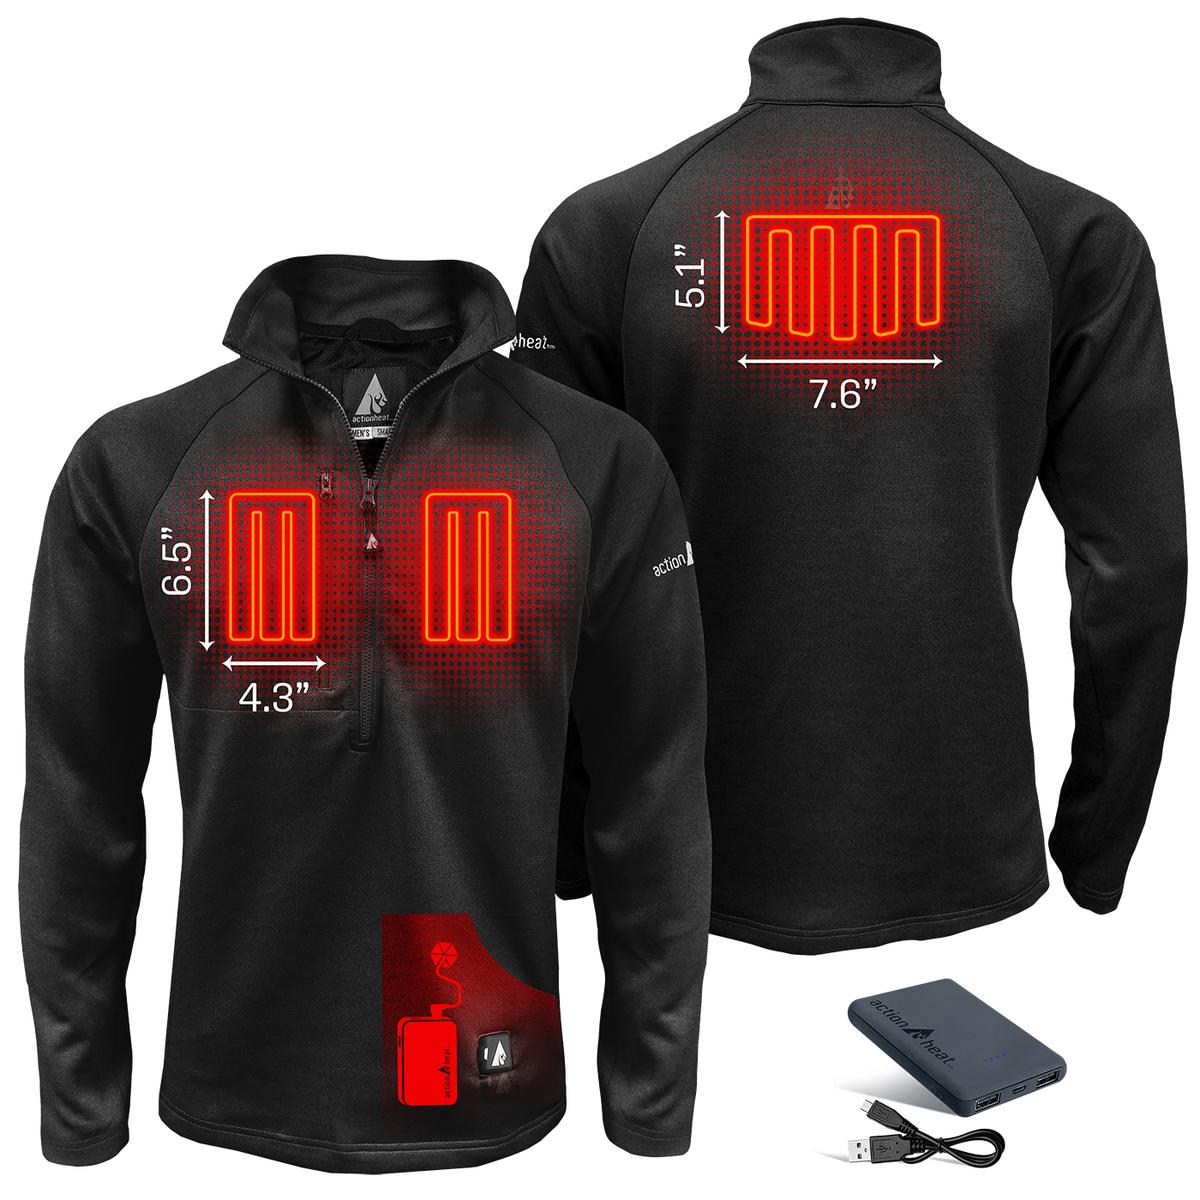 ActionHeat 5V Men's 1/2 Zip Pullover Battery Heated Shirt